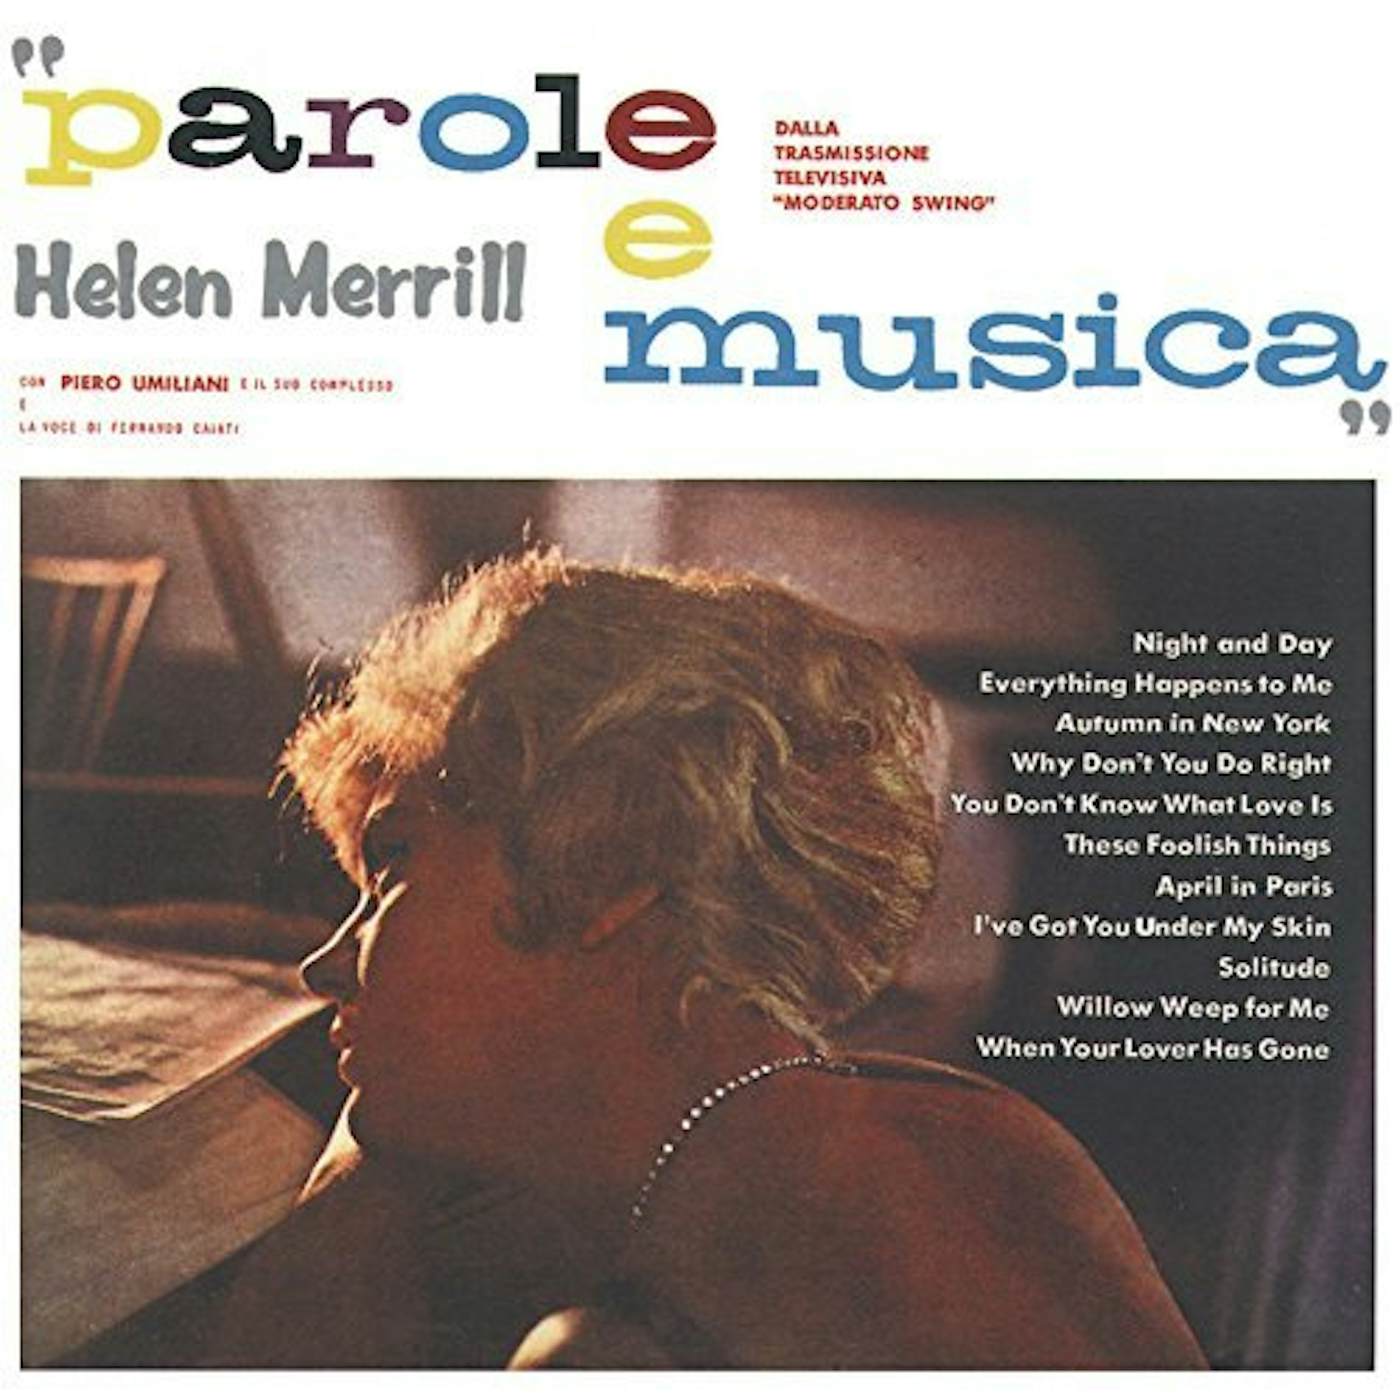 Helen Merrill PAROLE E MUSICA CD